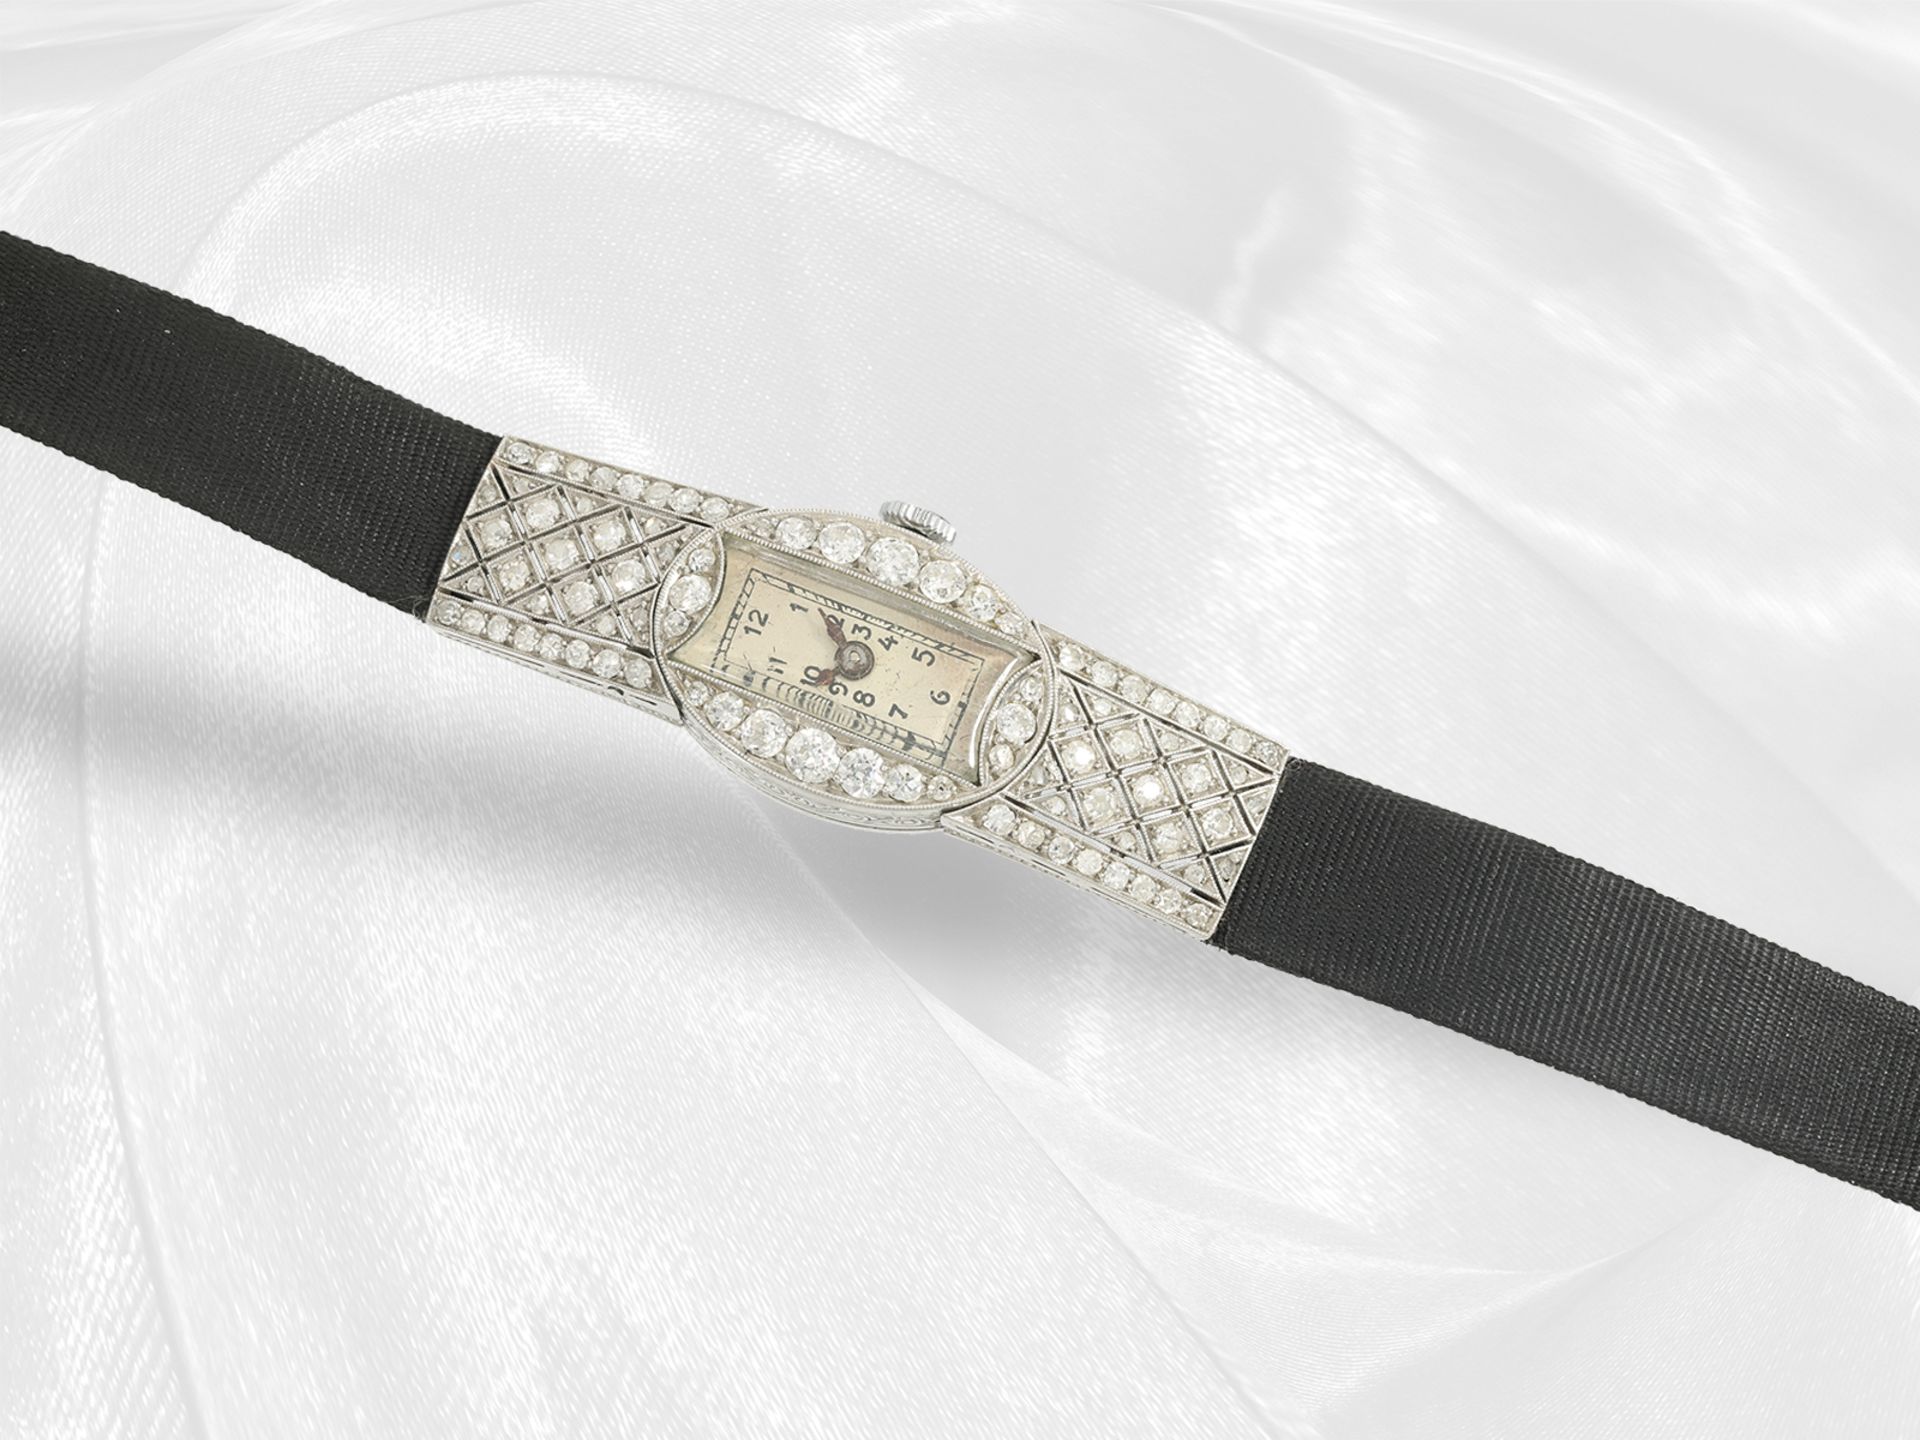 Armbanduhr: attraktive Art déco Damenuhr aus Platin mit Diamantbesatz, ca. 2ct, ca. 1920